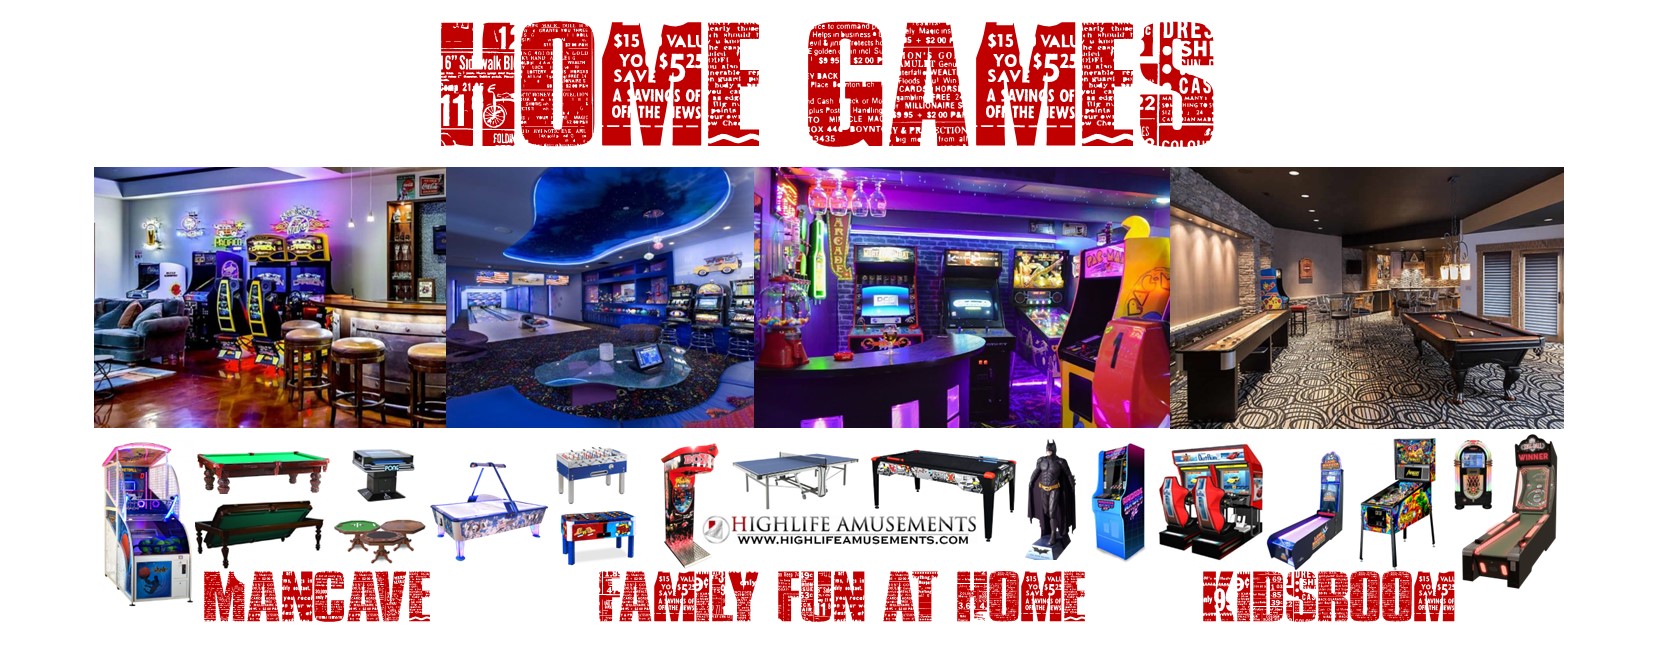 mancave, home games, girl cave, gameroom, thuis, amusement games, pooltafel, airhockey, tafeltennis, kopen huren, leasen